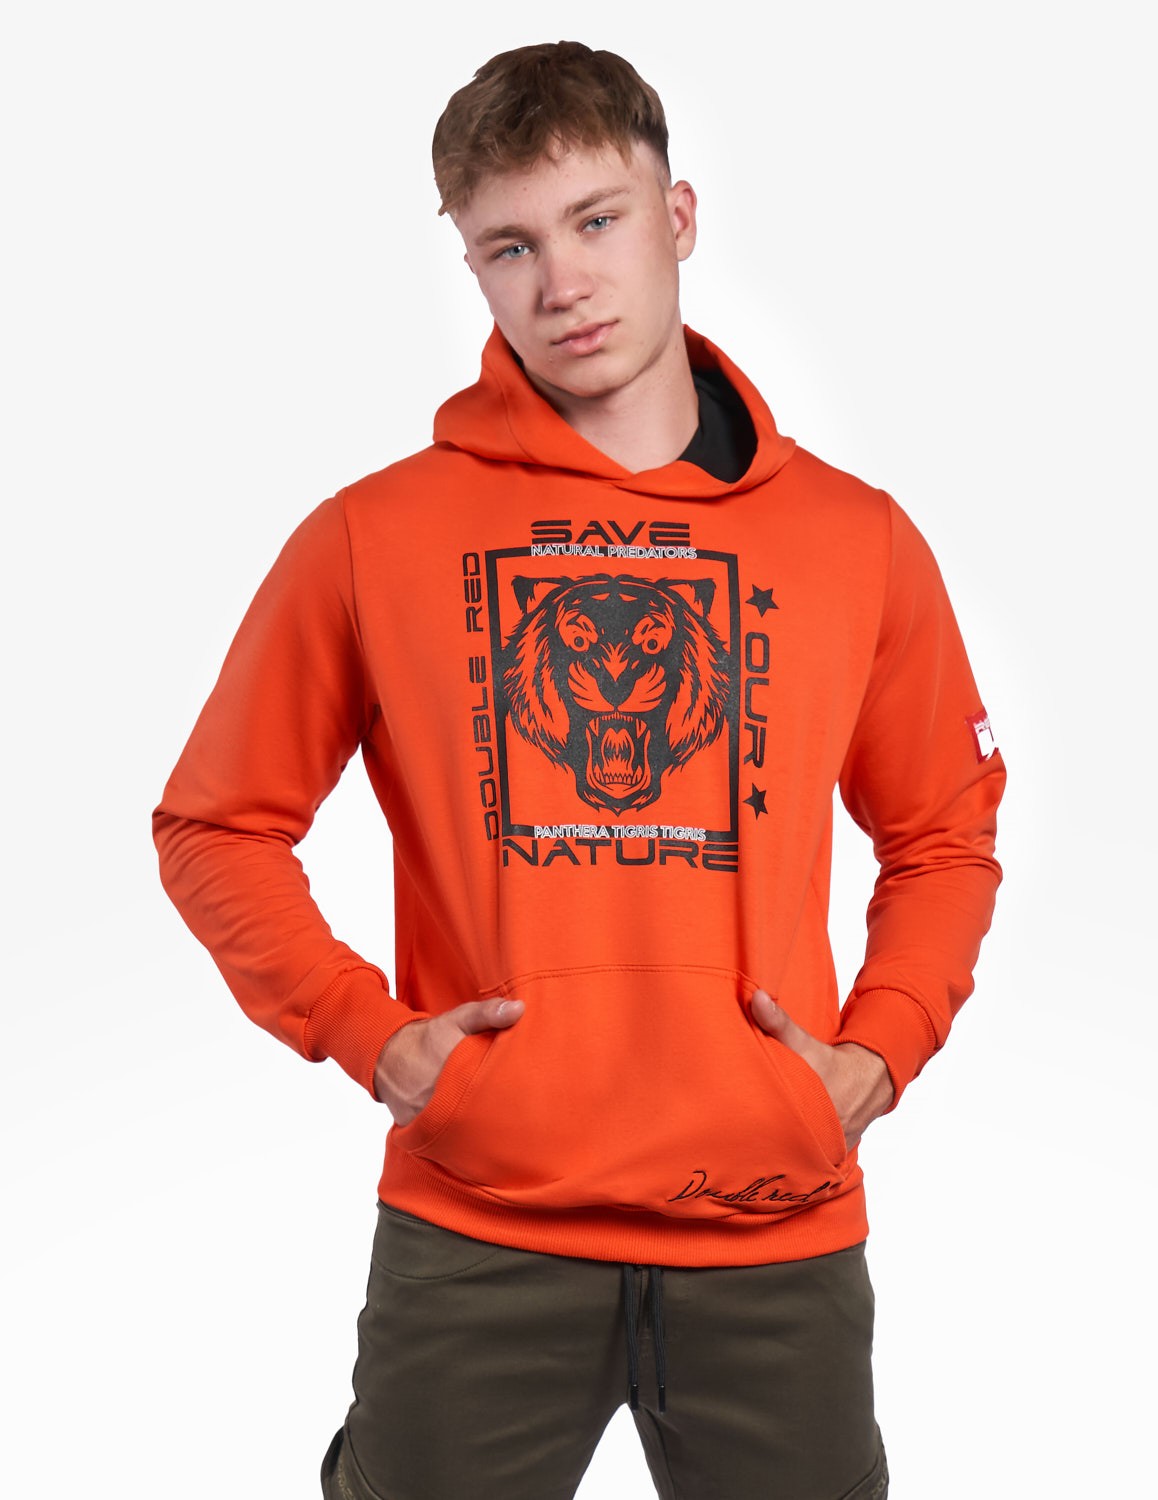 Natural Predators Tiger Hoodie Orange